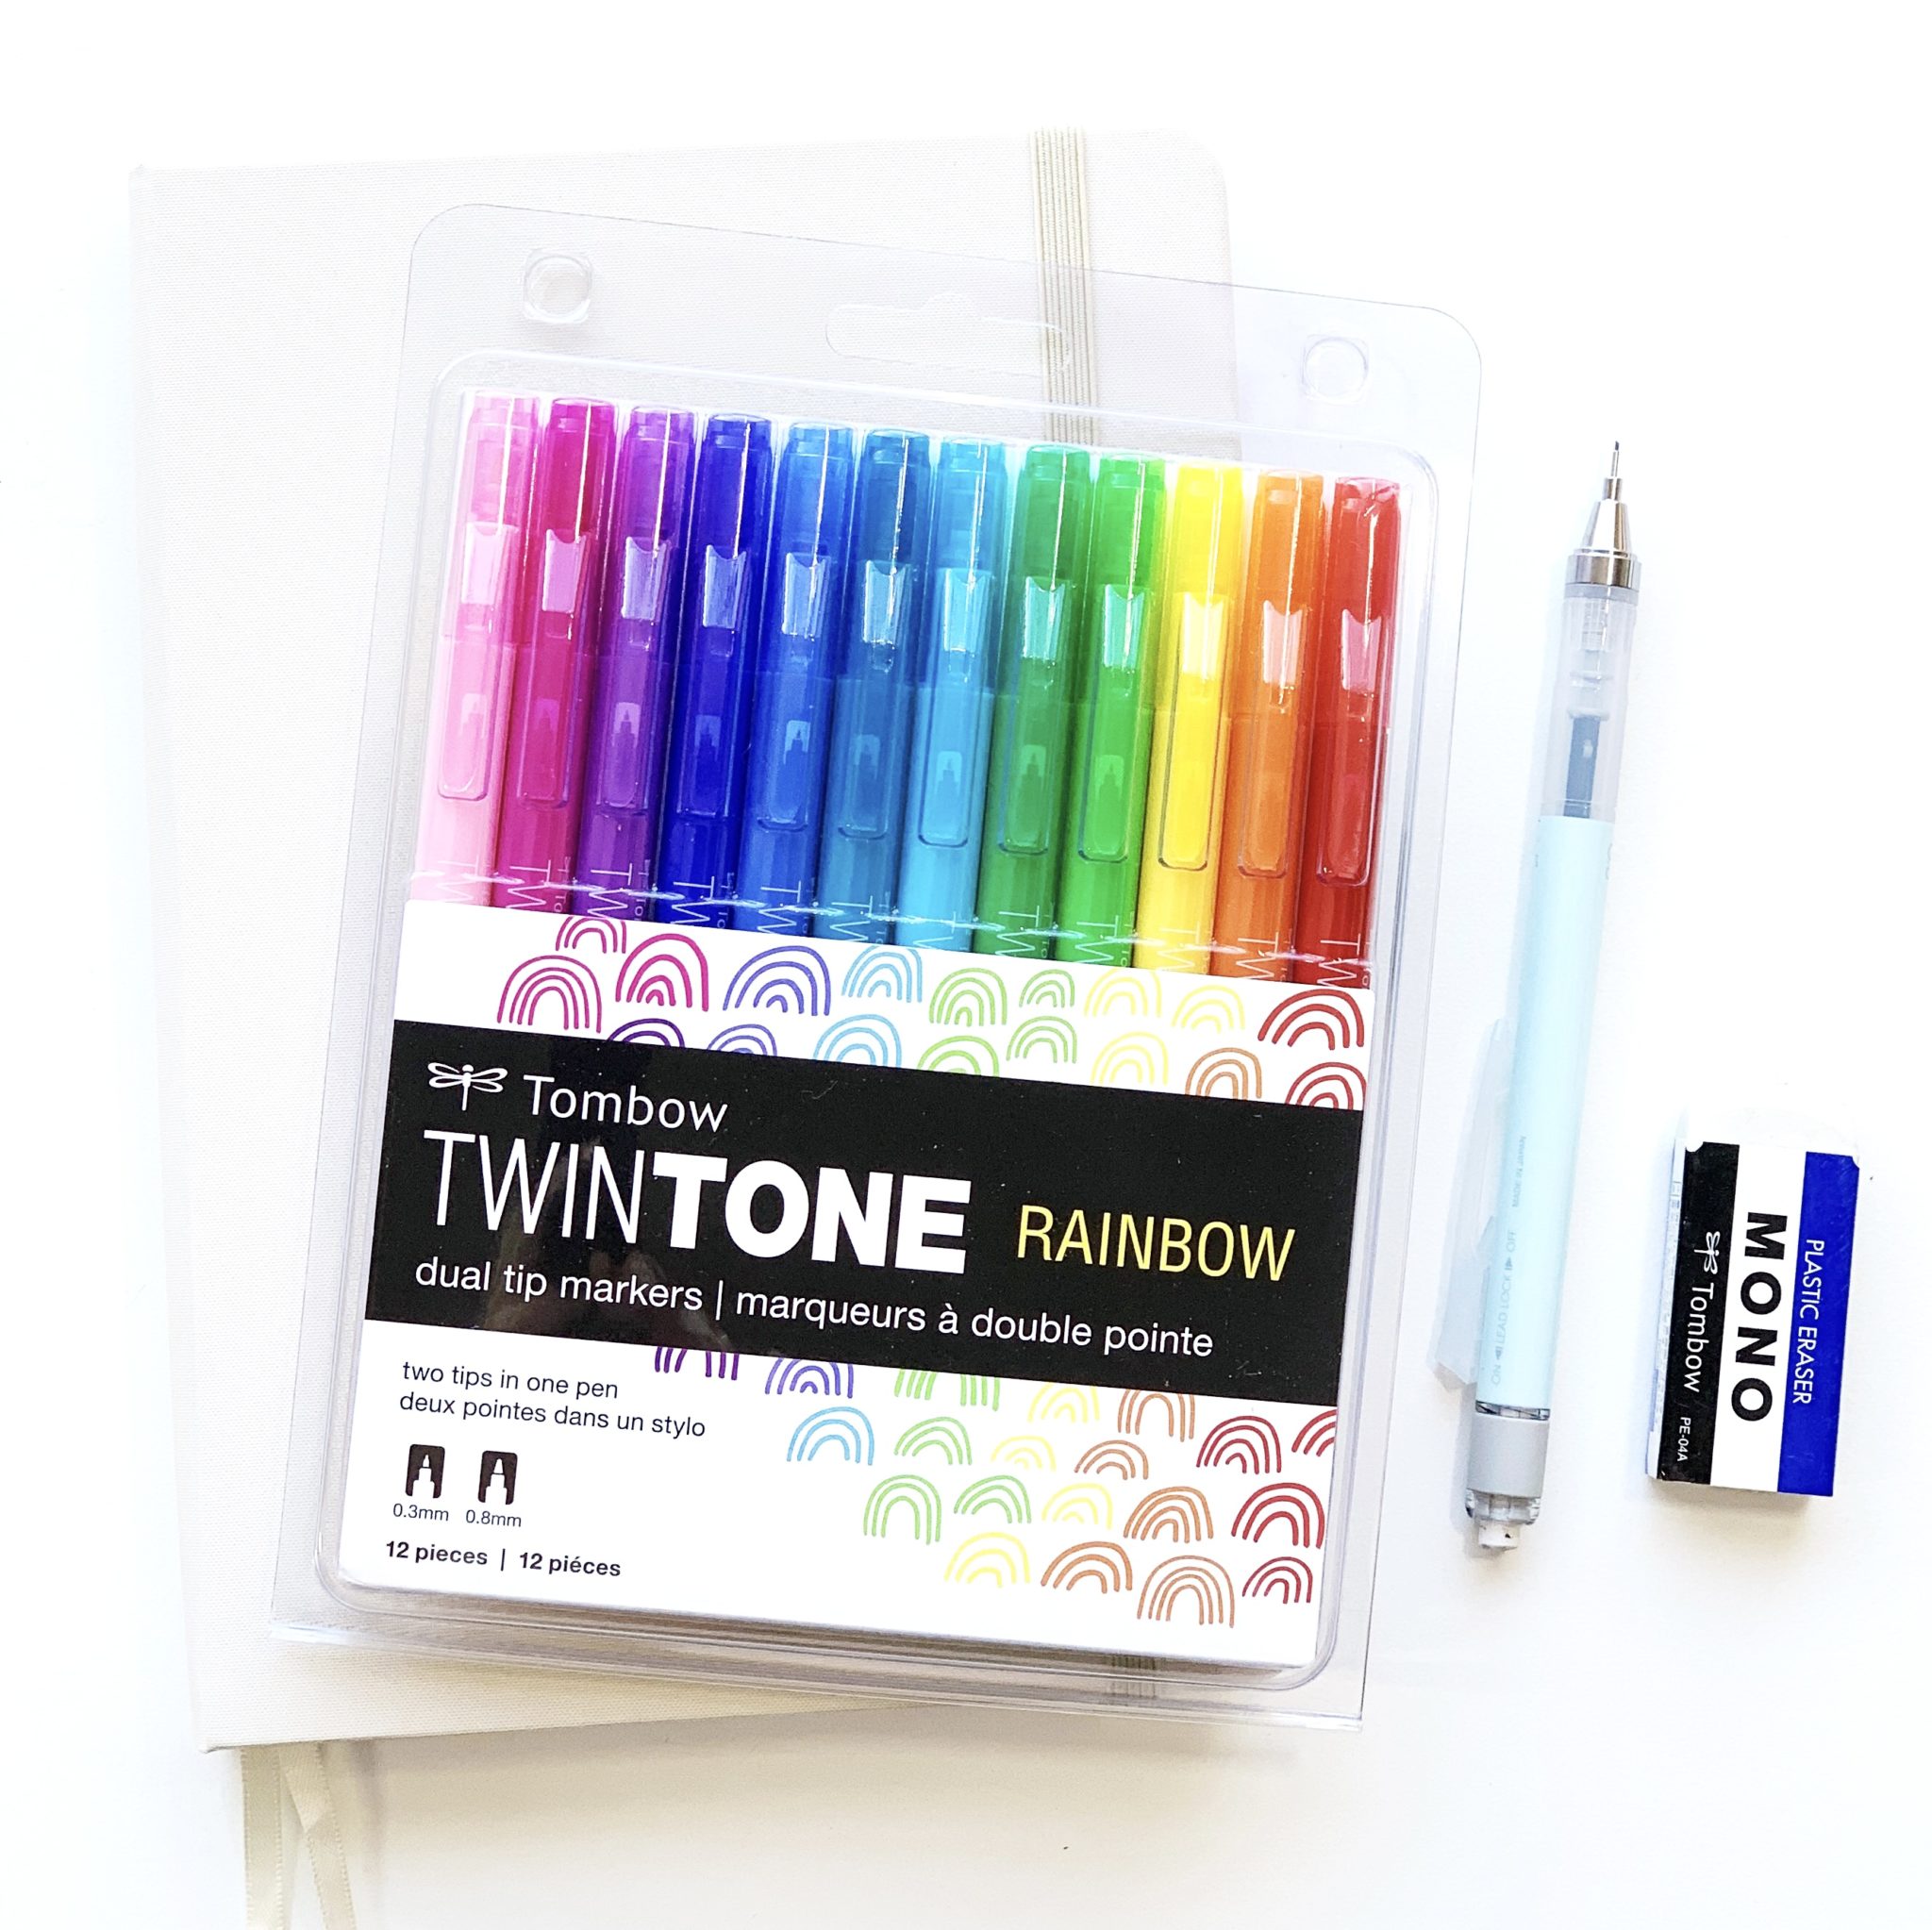 Tri-Tone Workbook  Blick Studio® Brush Markers